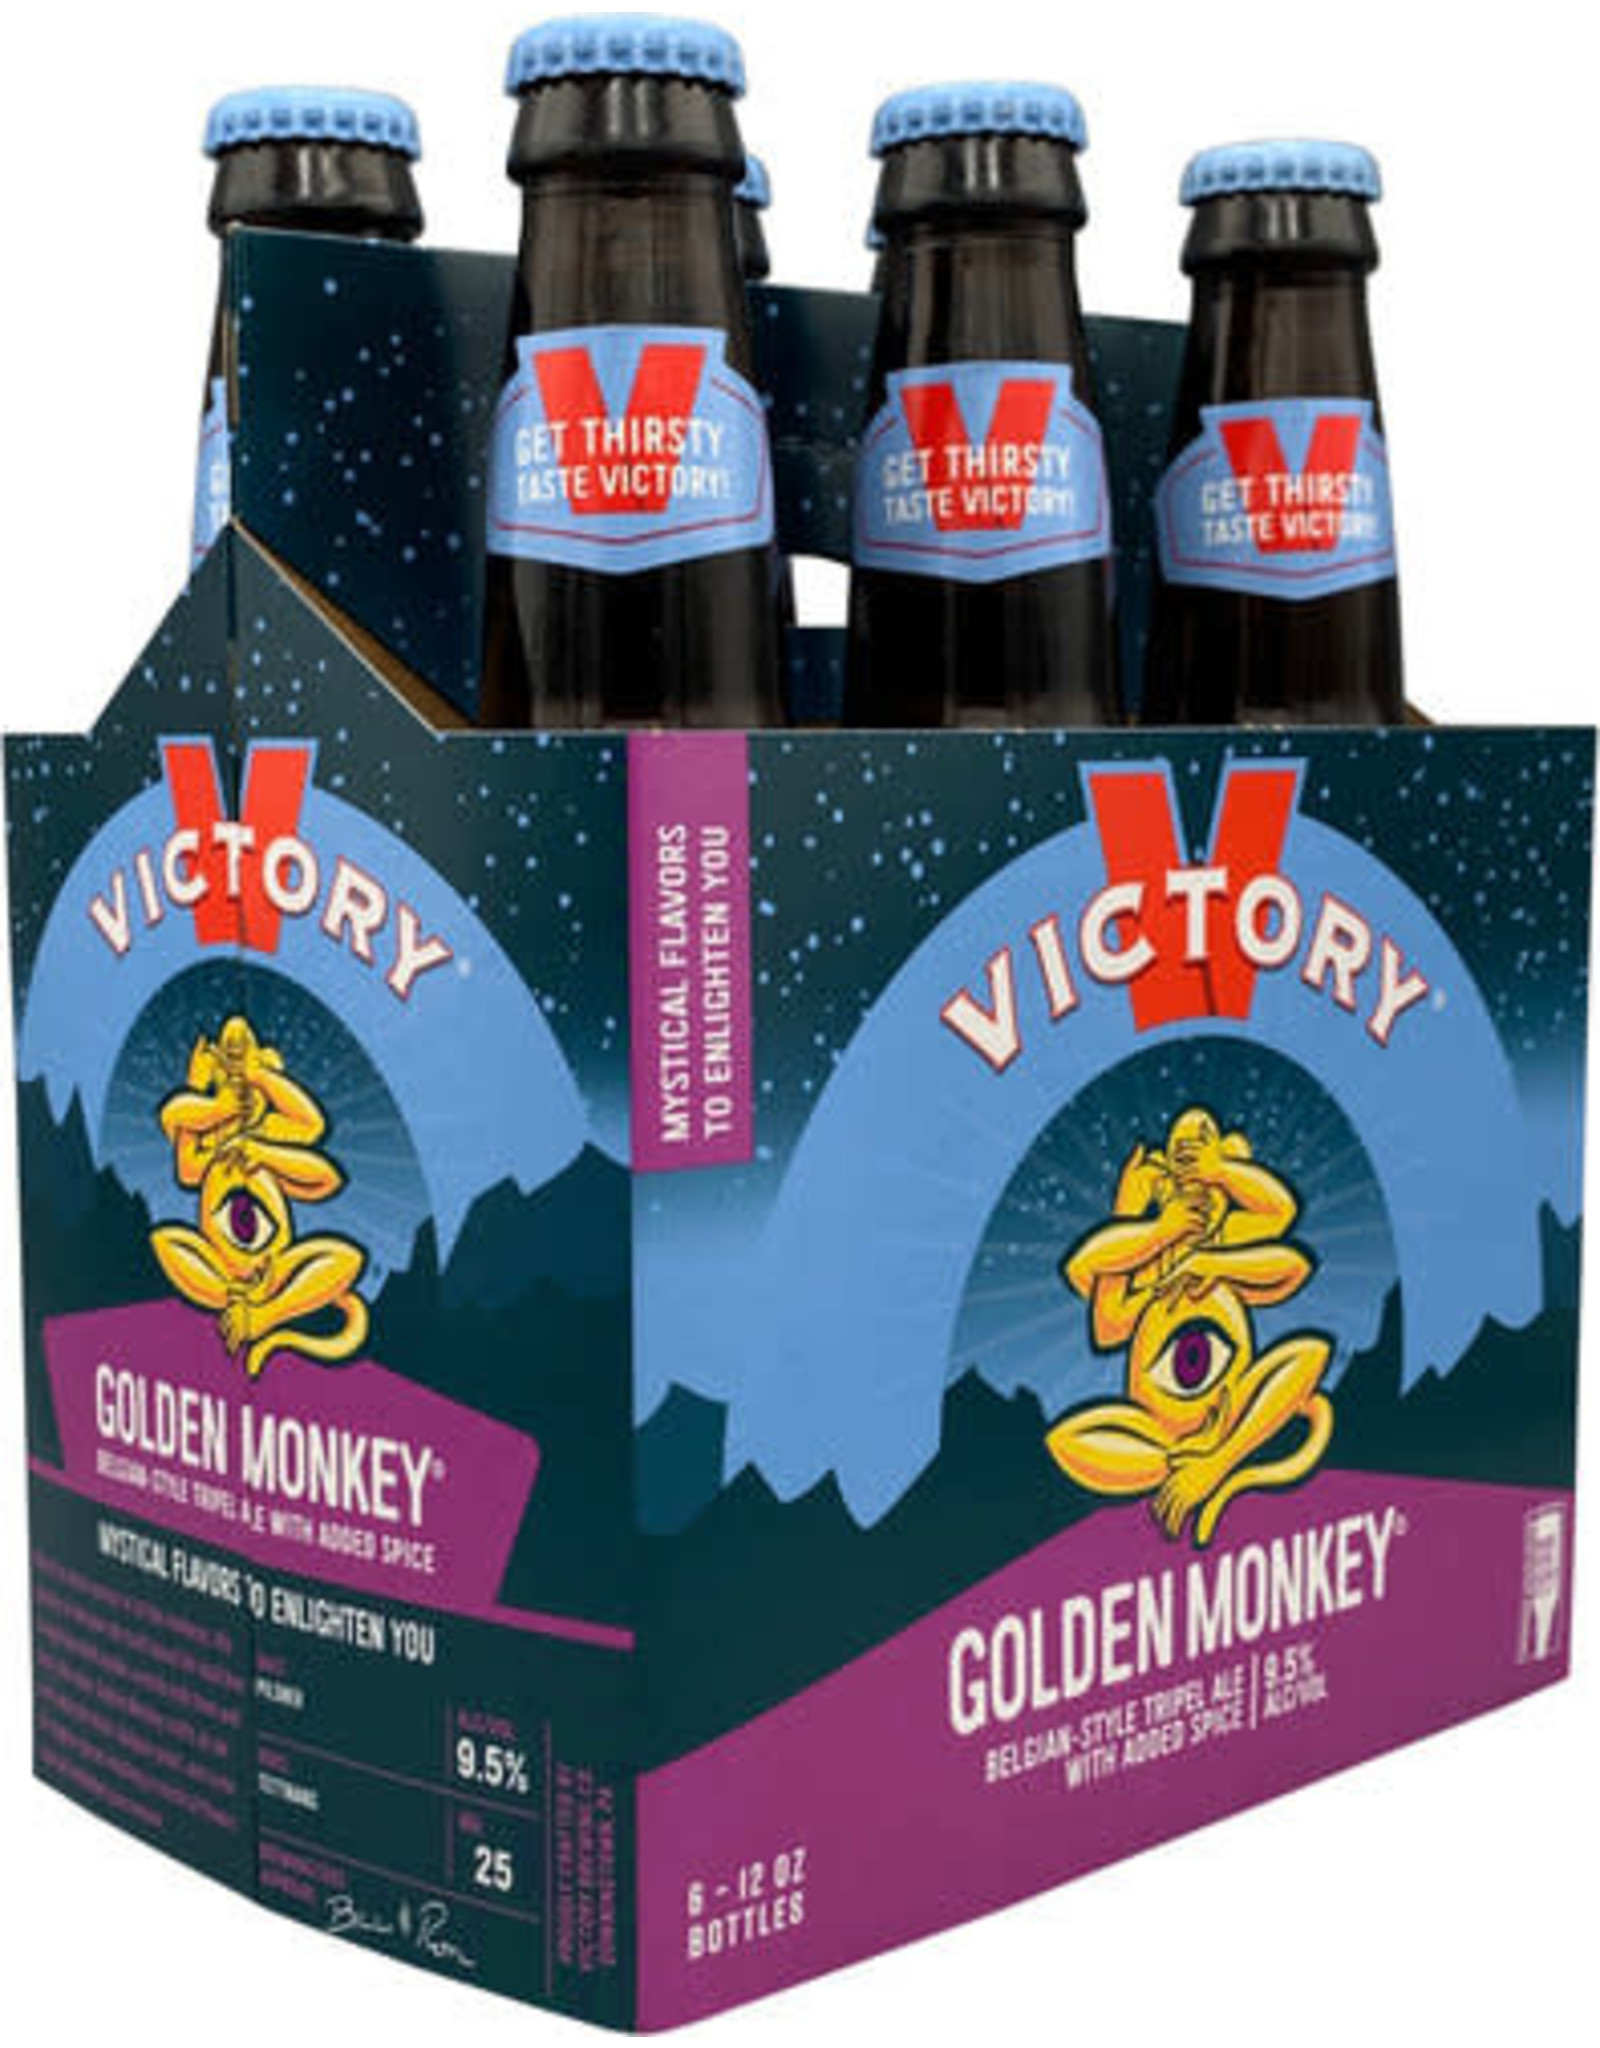 VICTORY GOLDEN MONKEY 4-6-12 NR